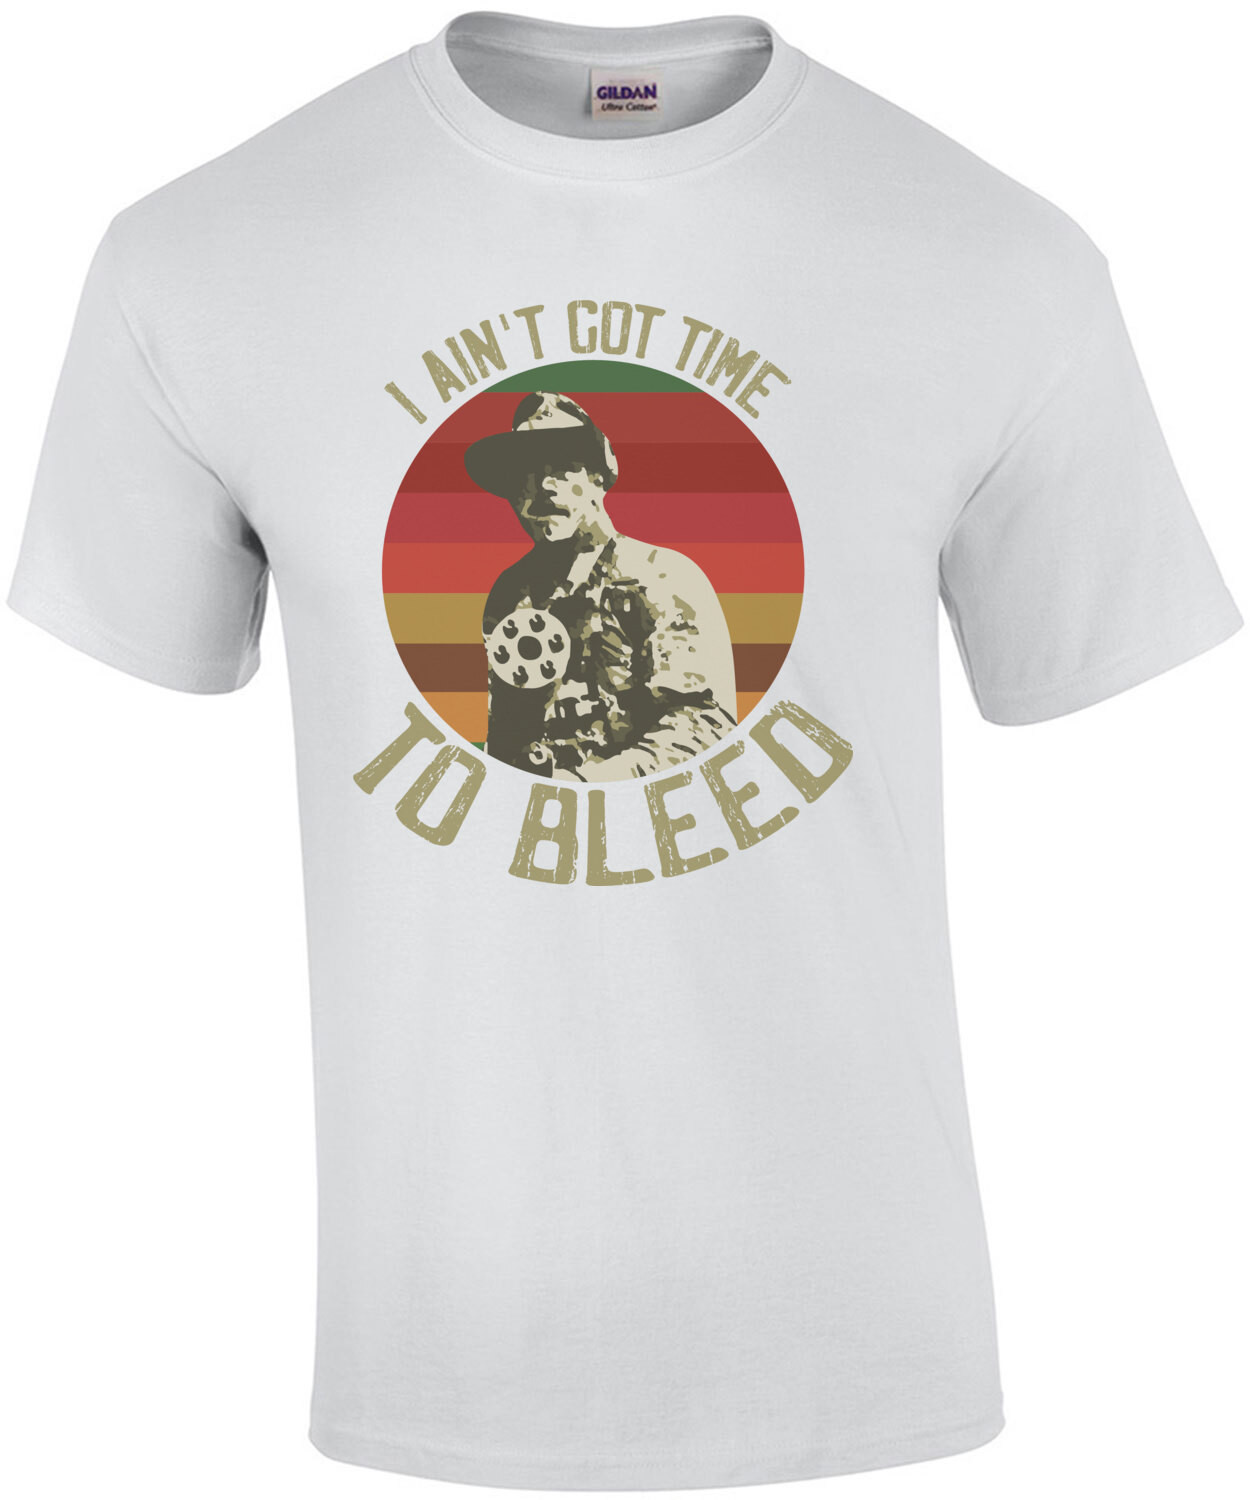 I ain't got time to bleed - Blain - Jesse Ventura - Predator - 80's t-shirt